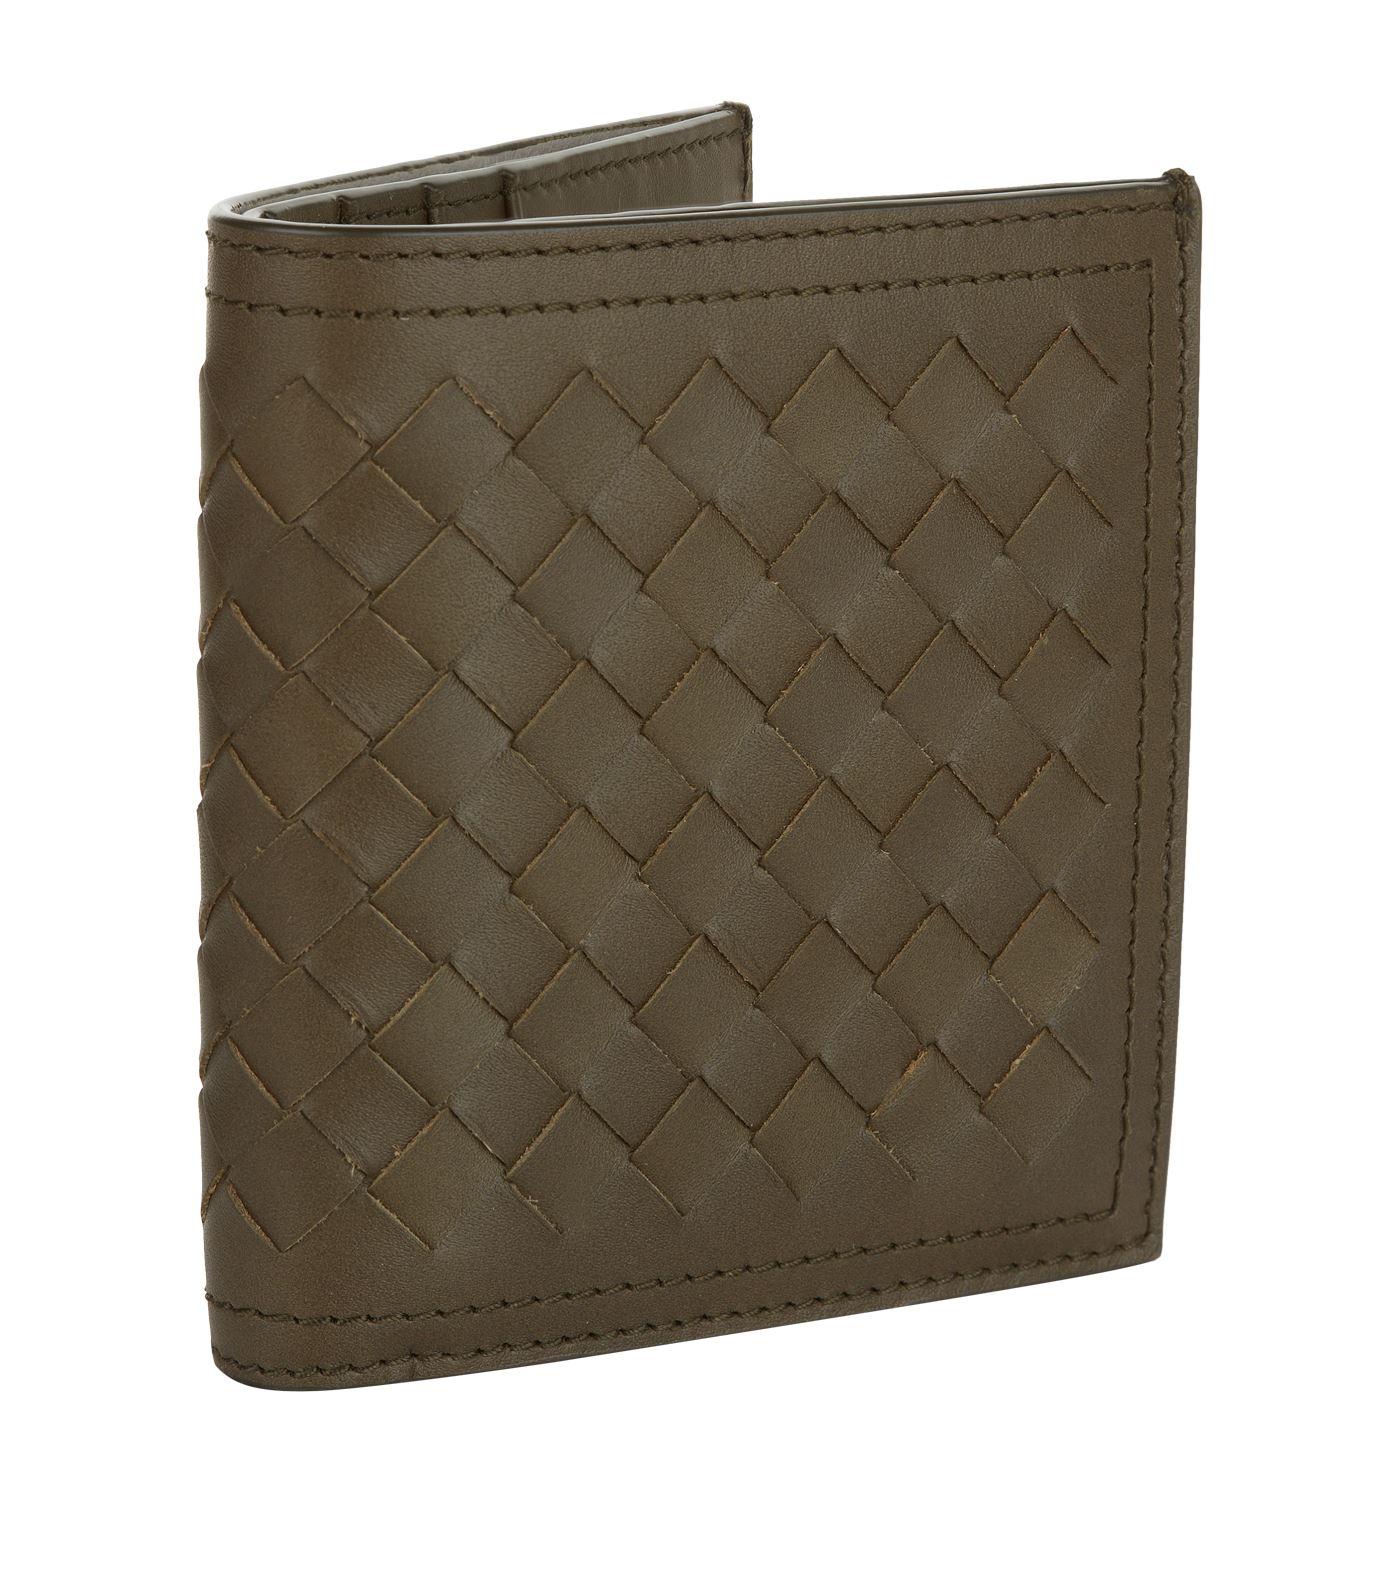 Lyst - Bottega Veneta Intrecciato Weave Leather Bifold Wallet in Brown